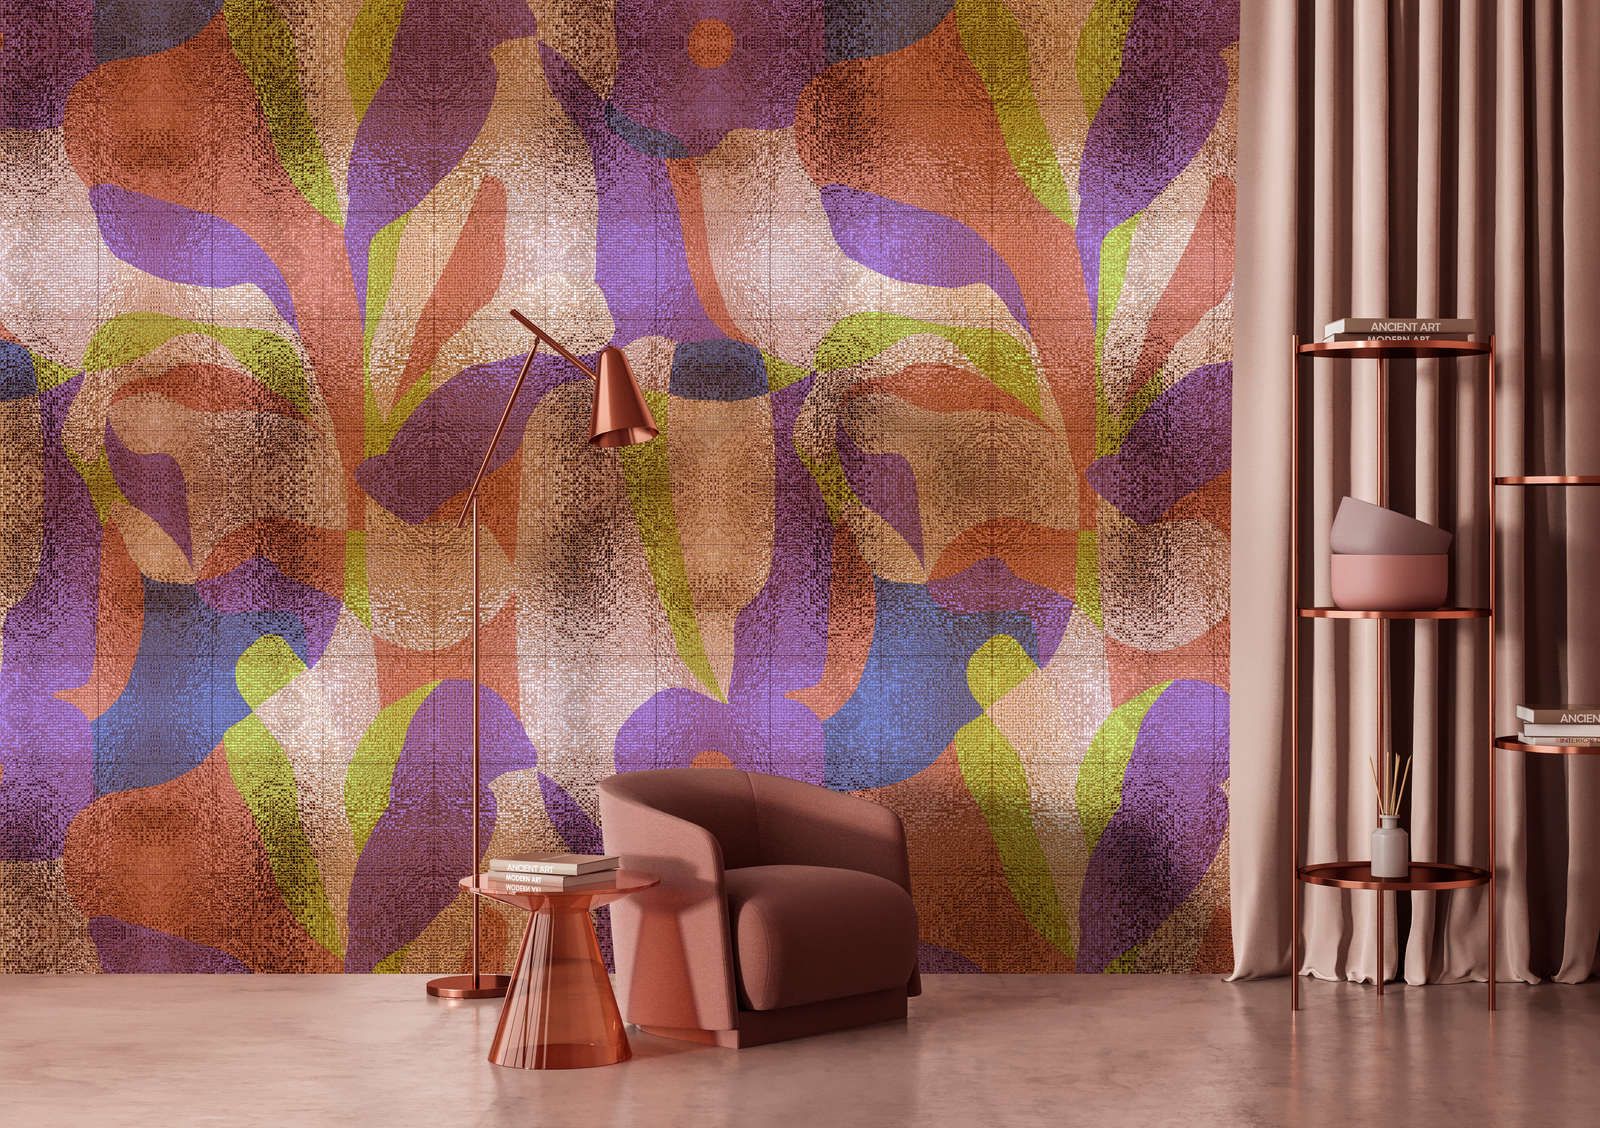             Digital behang »brillanaza« - Grafisch, kleurrijk bladontwerp met mozaïekstructuur - Gladde, licht parelmoerachtige vliesstof
        